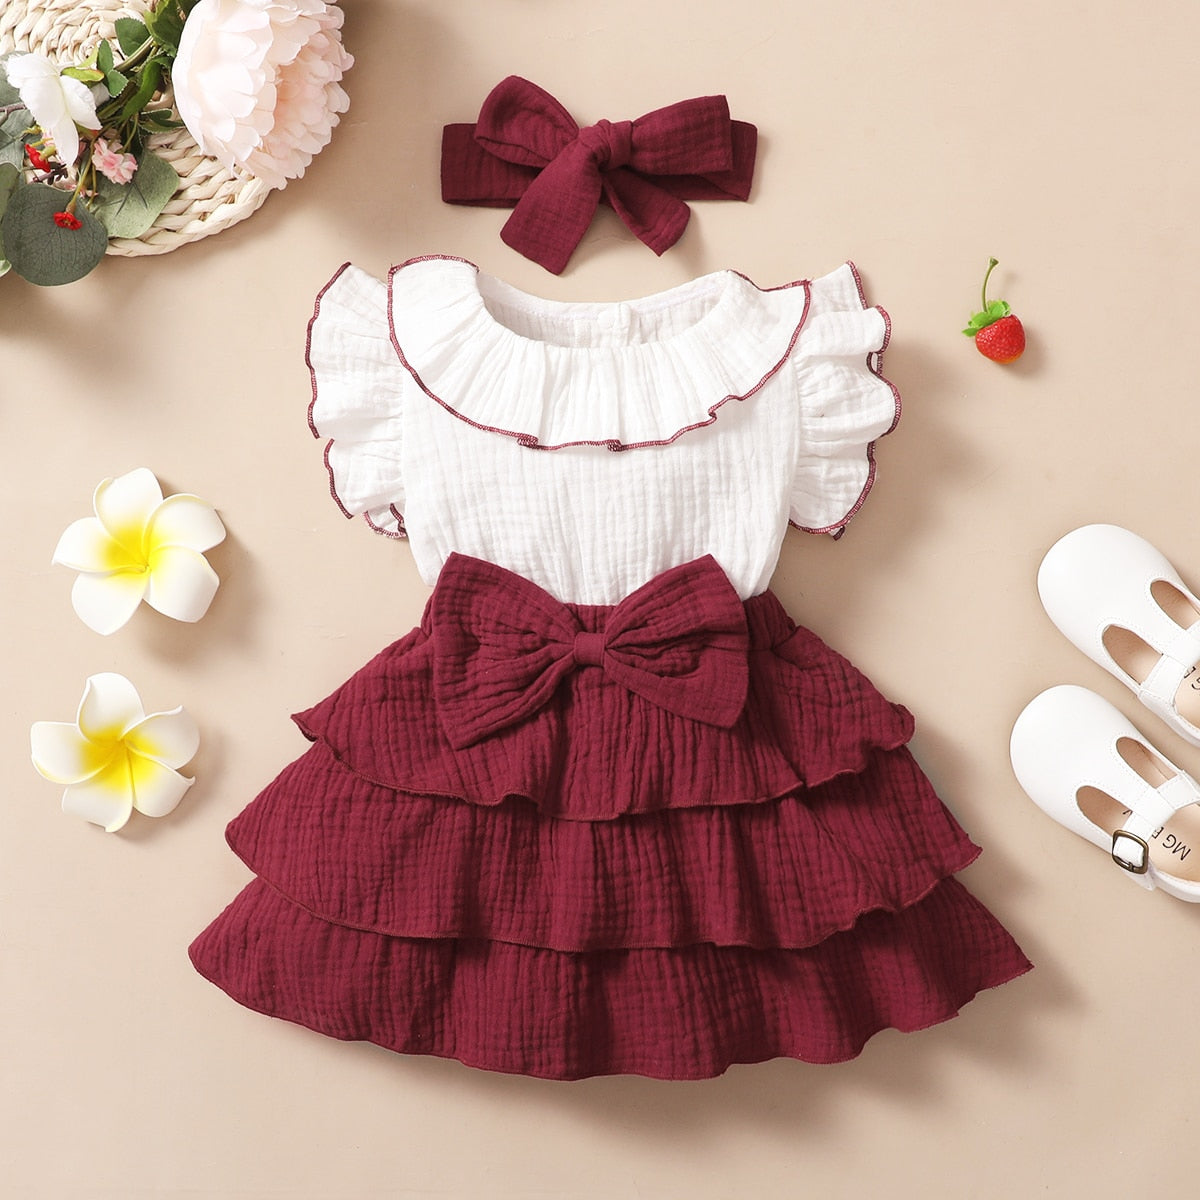 hibobi Baby Girls Dress Toddler Girl Clothes Set 2Pcs Baby Bowknot Ruffles Dresses Cute Sleeveless Cotton Newborn Princess Dress